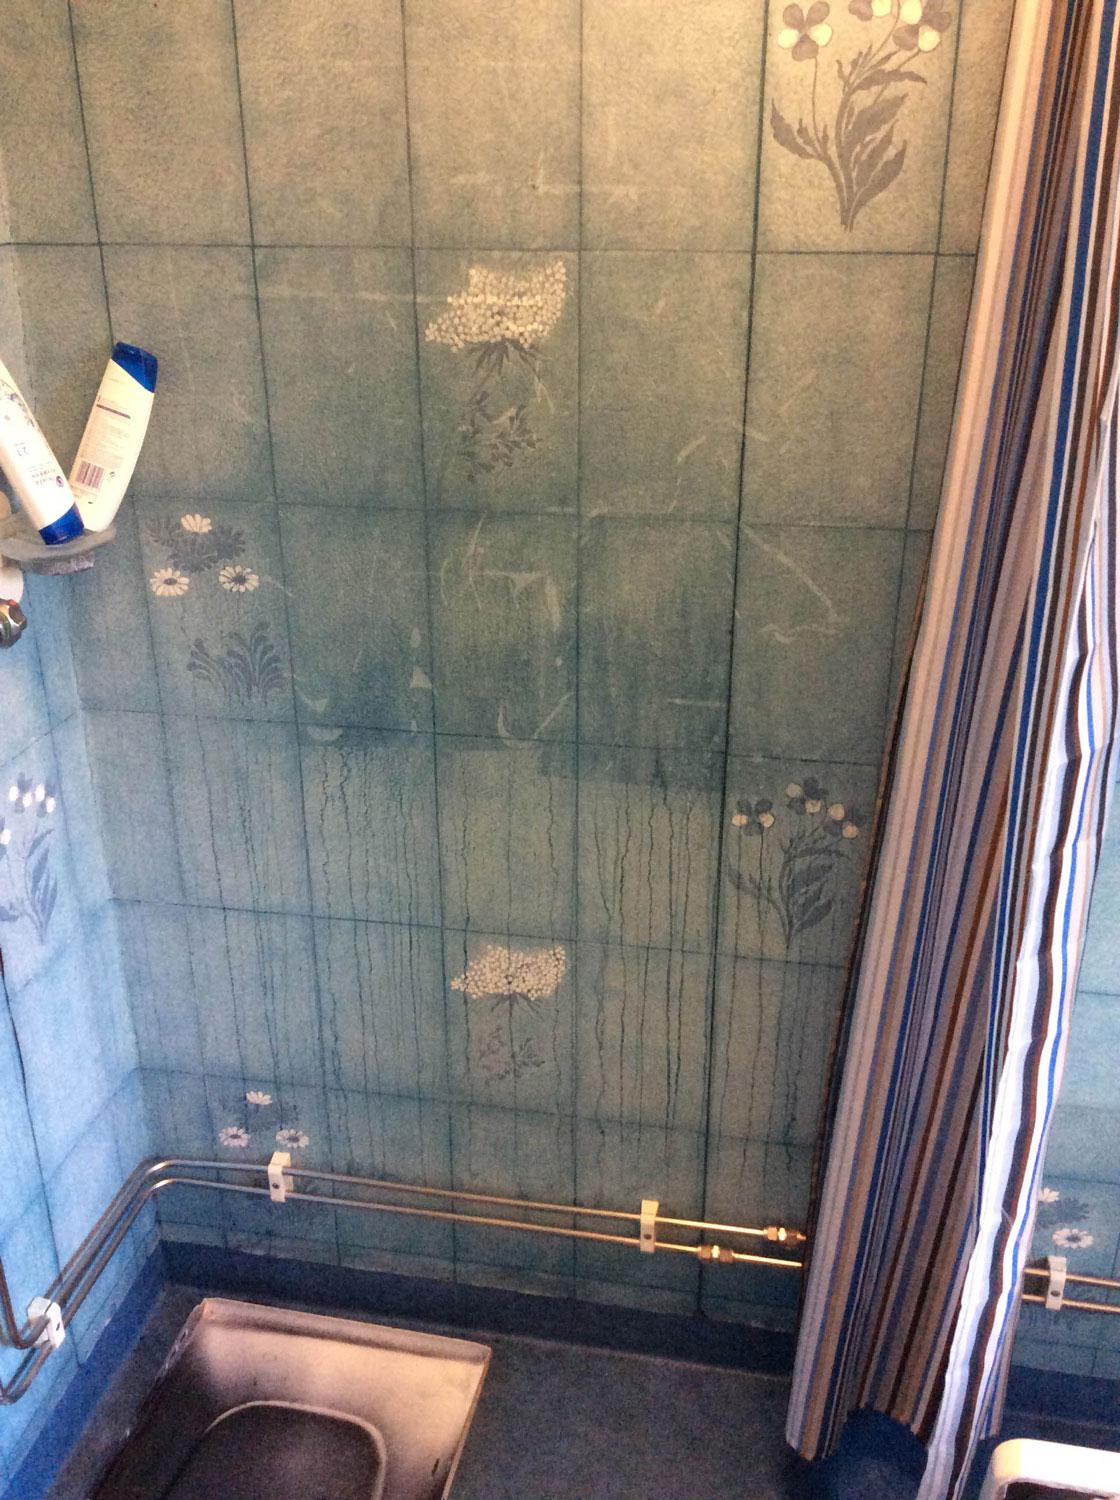 I duschen finns spår efter polisens arbete.